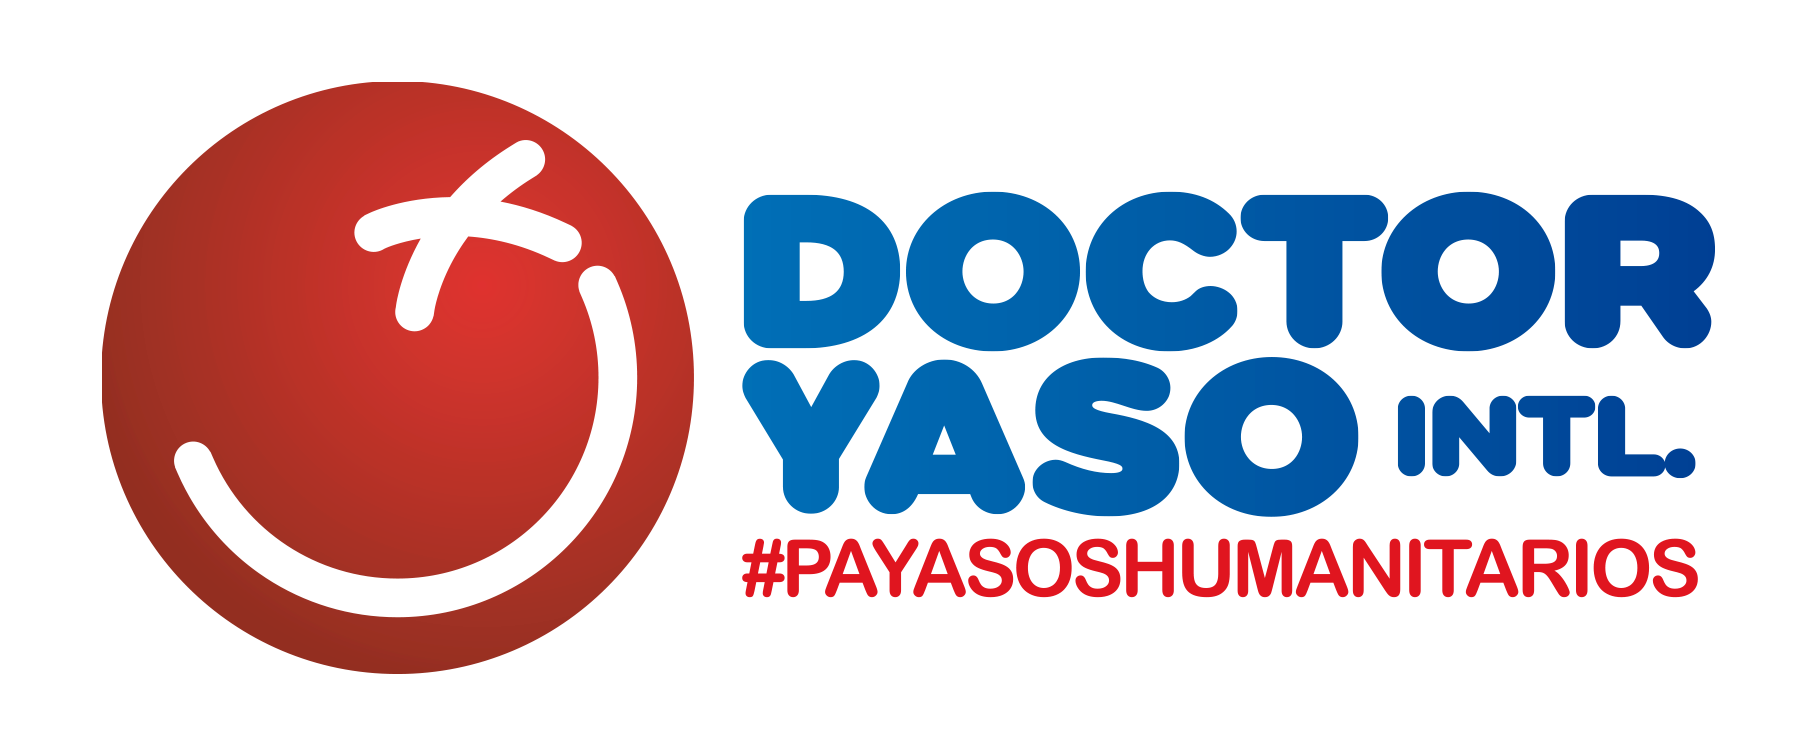 Talento Importado - Emprendedores - Doctor Yaso Internacional - Payasos Humanitarios